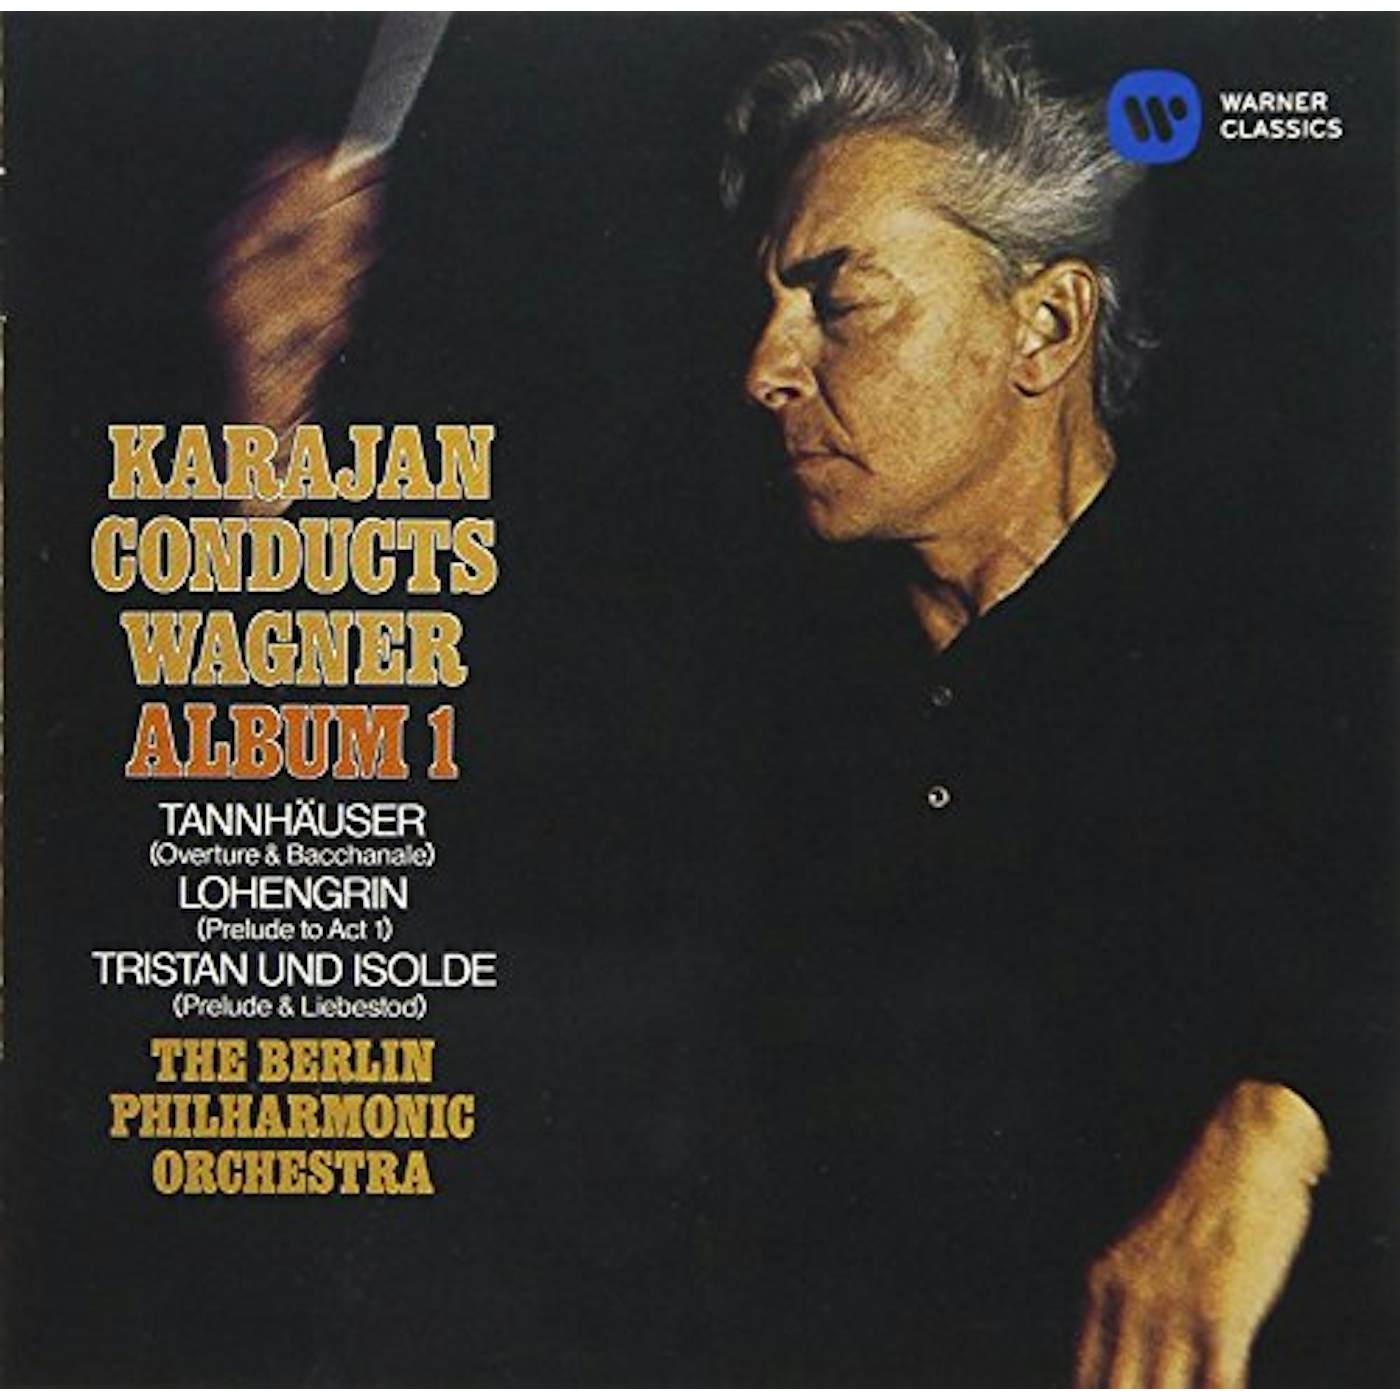 Herbert von Karajan CONDUCTS WAGNER ALNUM 1 CD